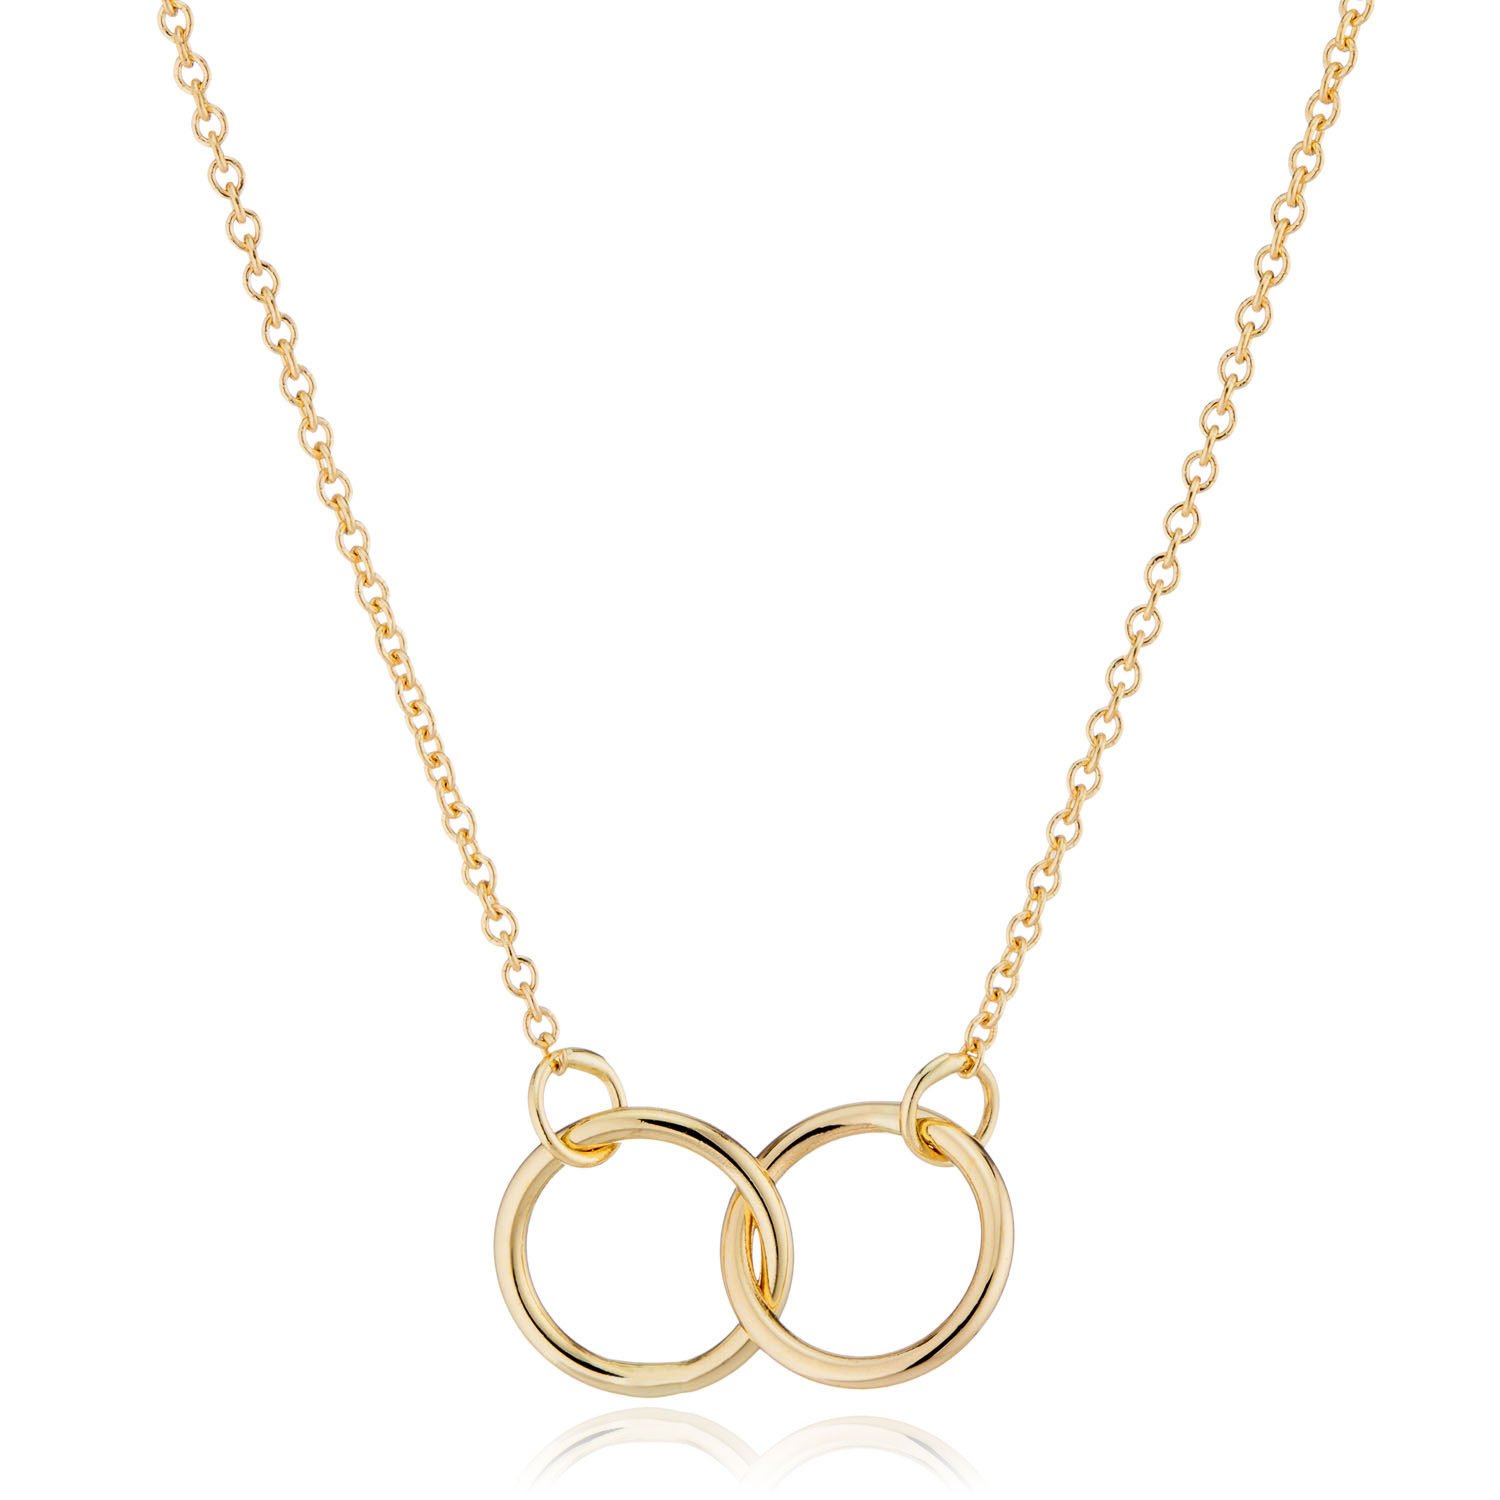 necklace-14k-gold-interlocking-rings-necklace-1.jpg?v=1478124234